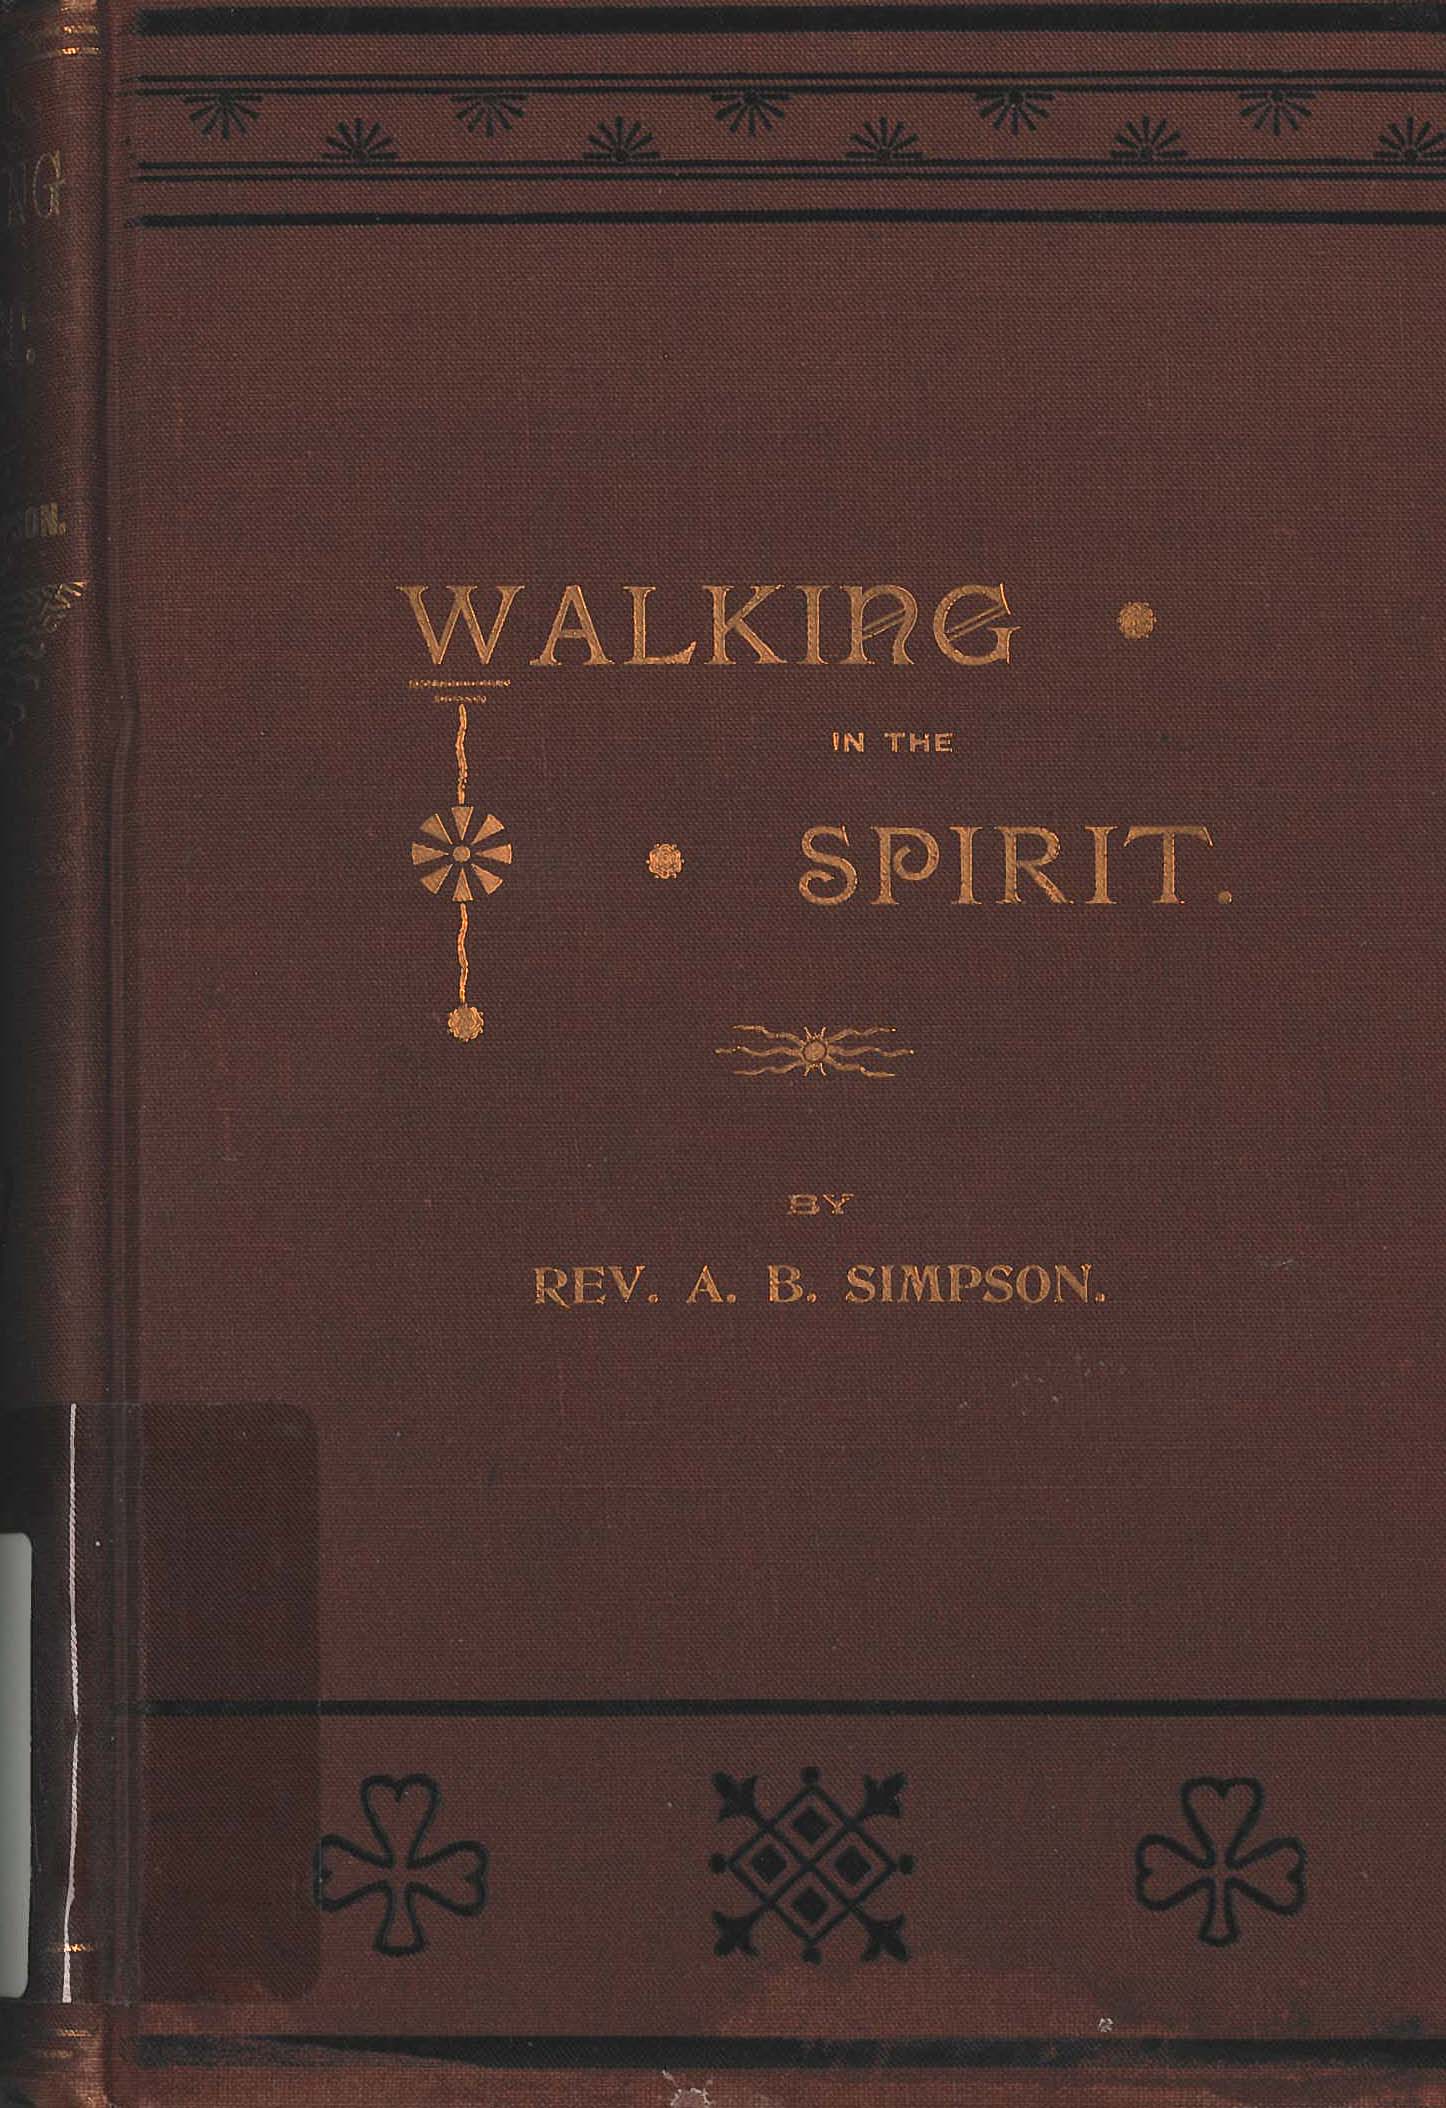 Walking in the Spirit Cover Scan, original cover circa 1900